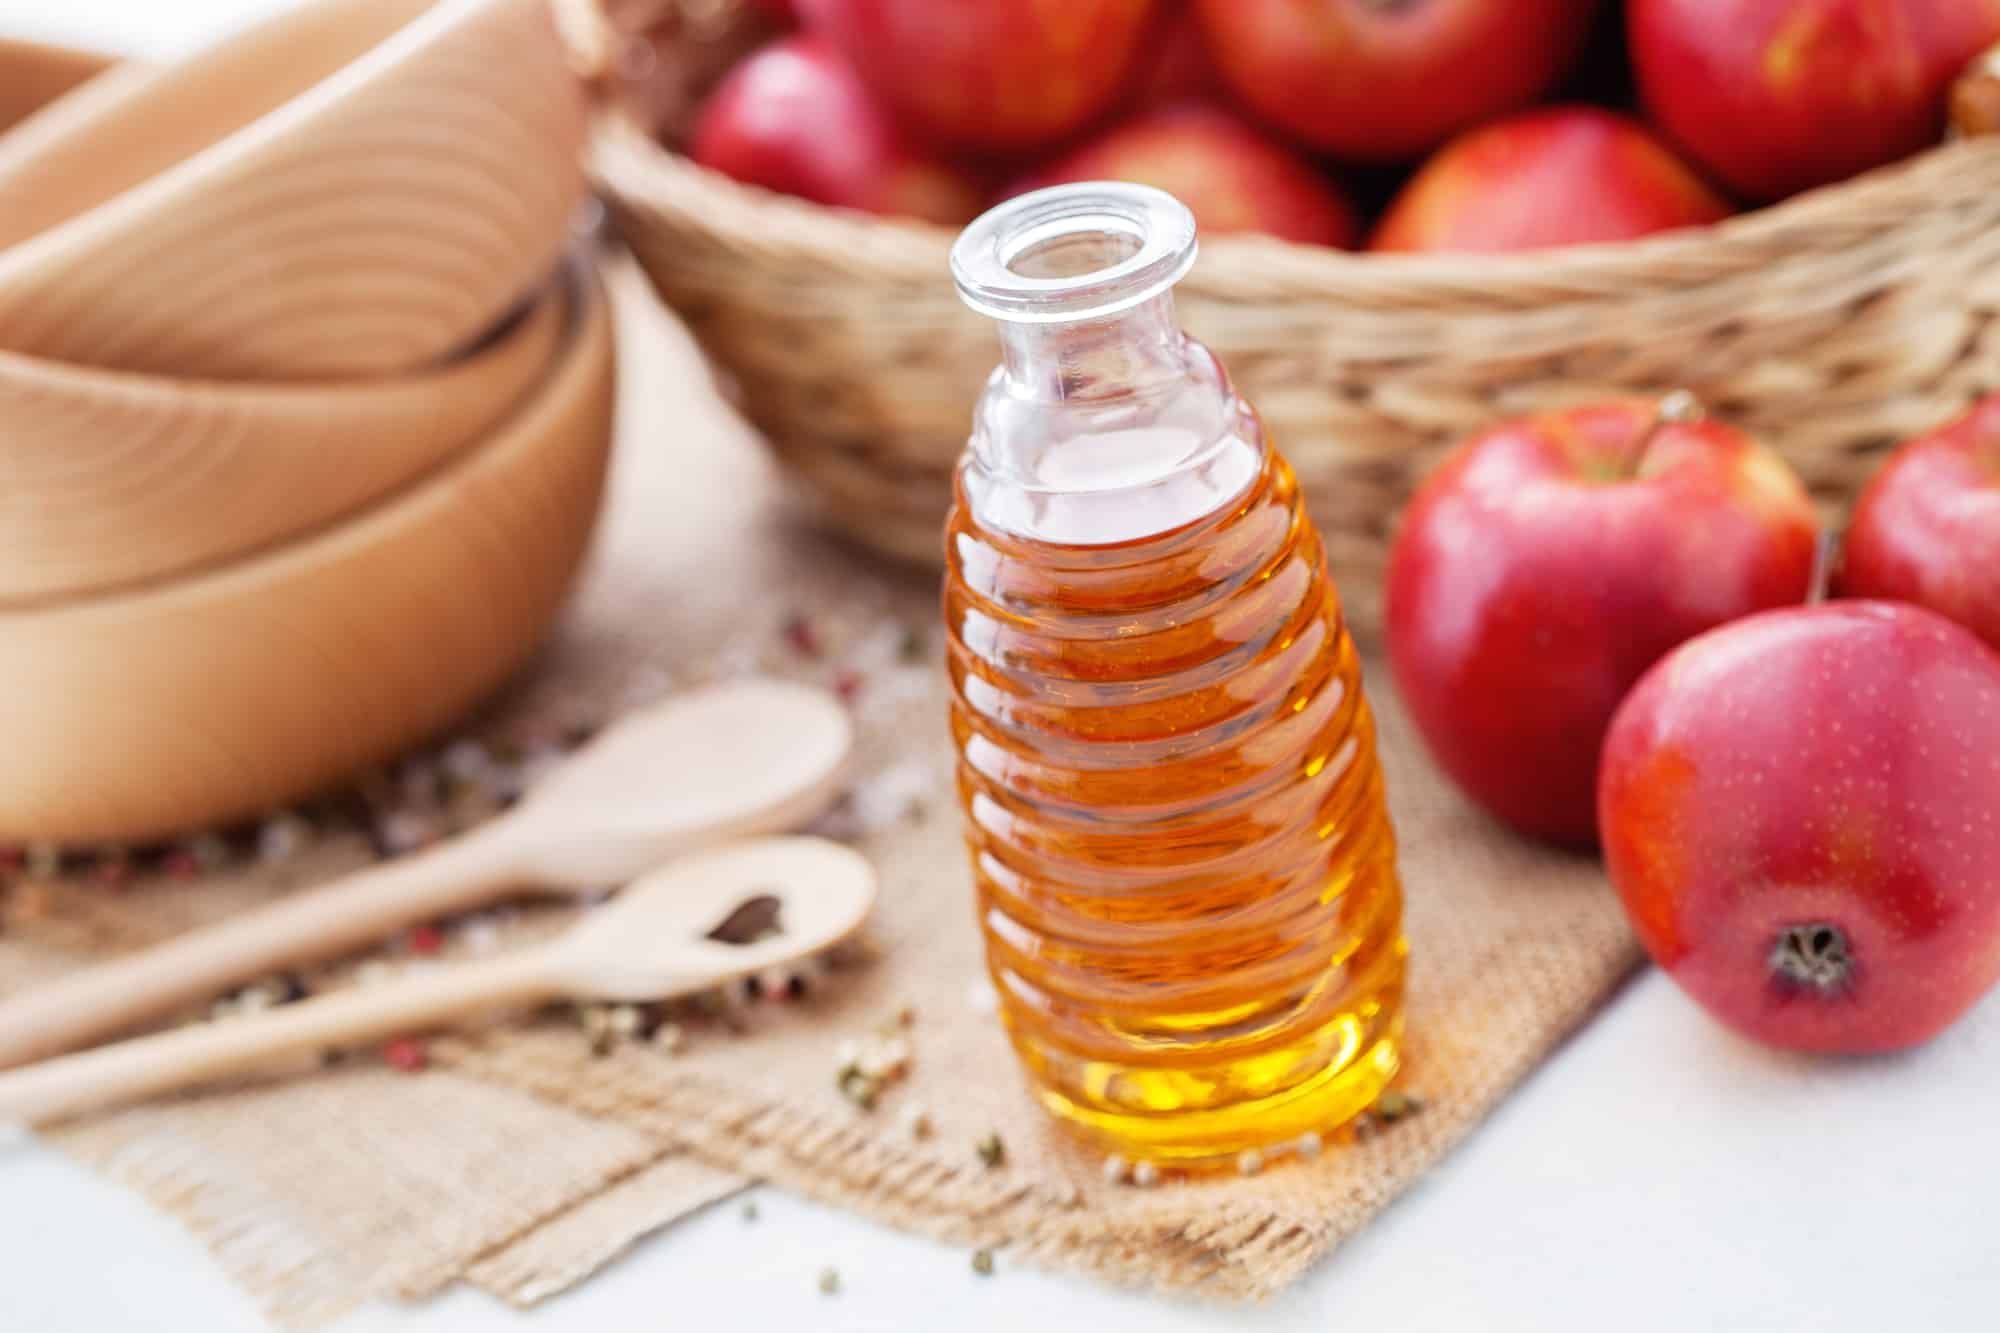 bottle of Apple cider vinegar with fresh fruits - food and drink